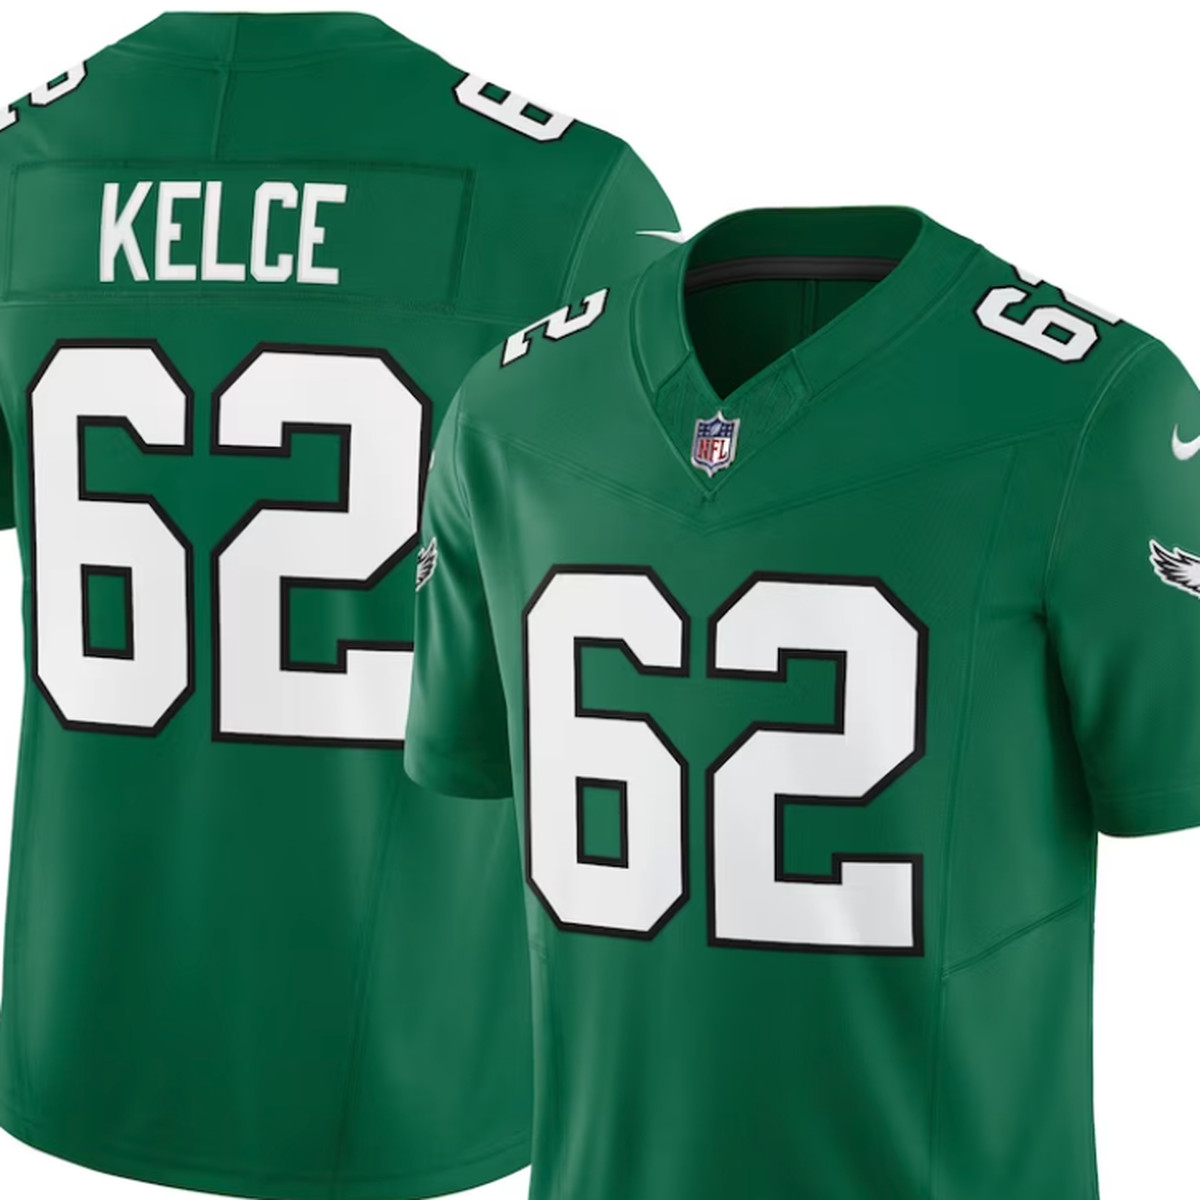 Eagles kelly green throwback alternate jerseys for sale - Bleeding Green  Nation